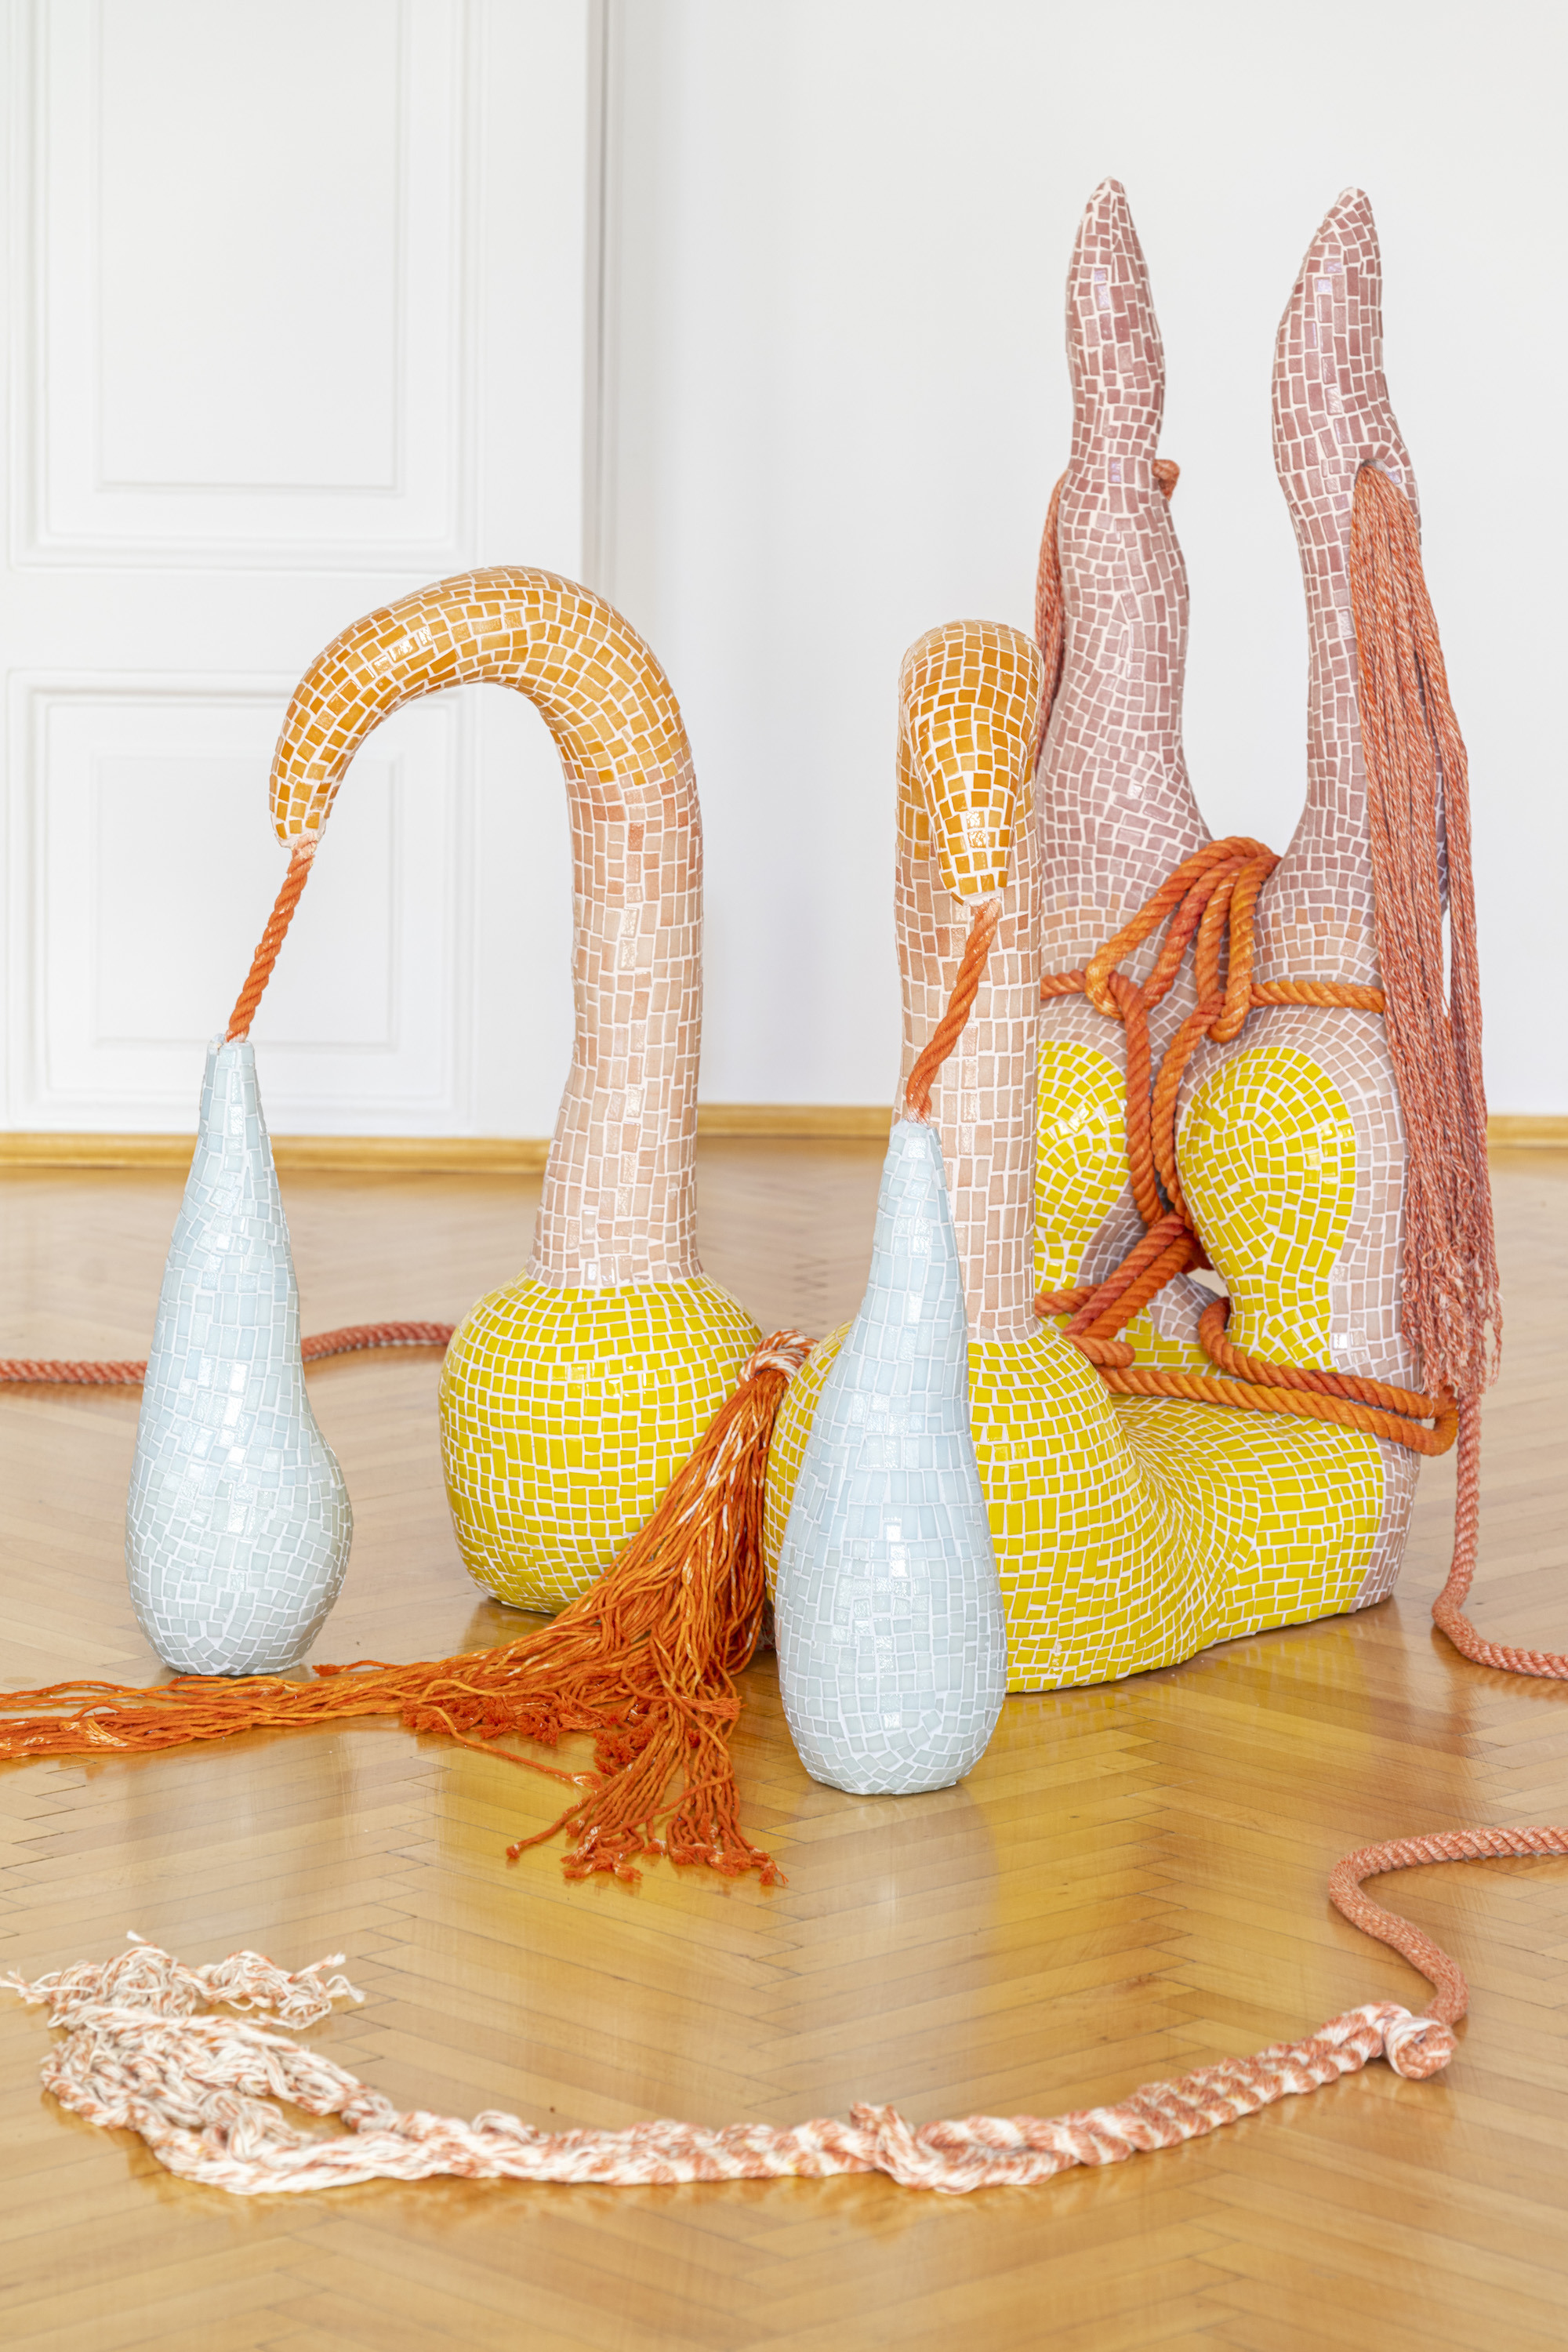  Zsófia Keresztes – Untitled, 2019, styrofoam, rope, glue, grout, glass mosaic, textile dye, felt, expanding foam, 100 x 90 x 120 cm (without ropes)